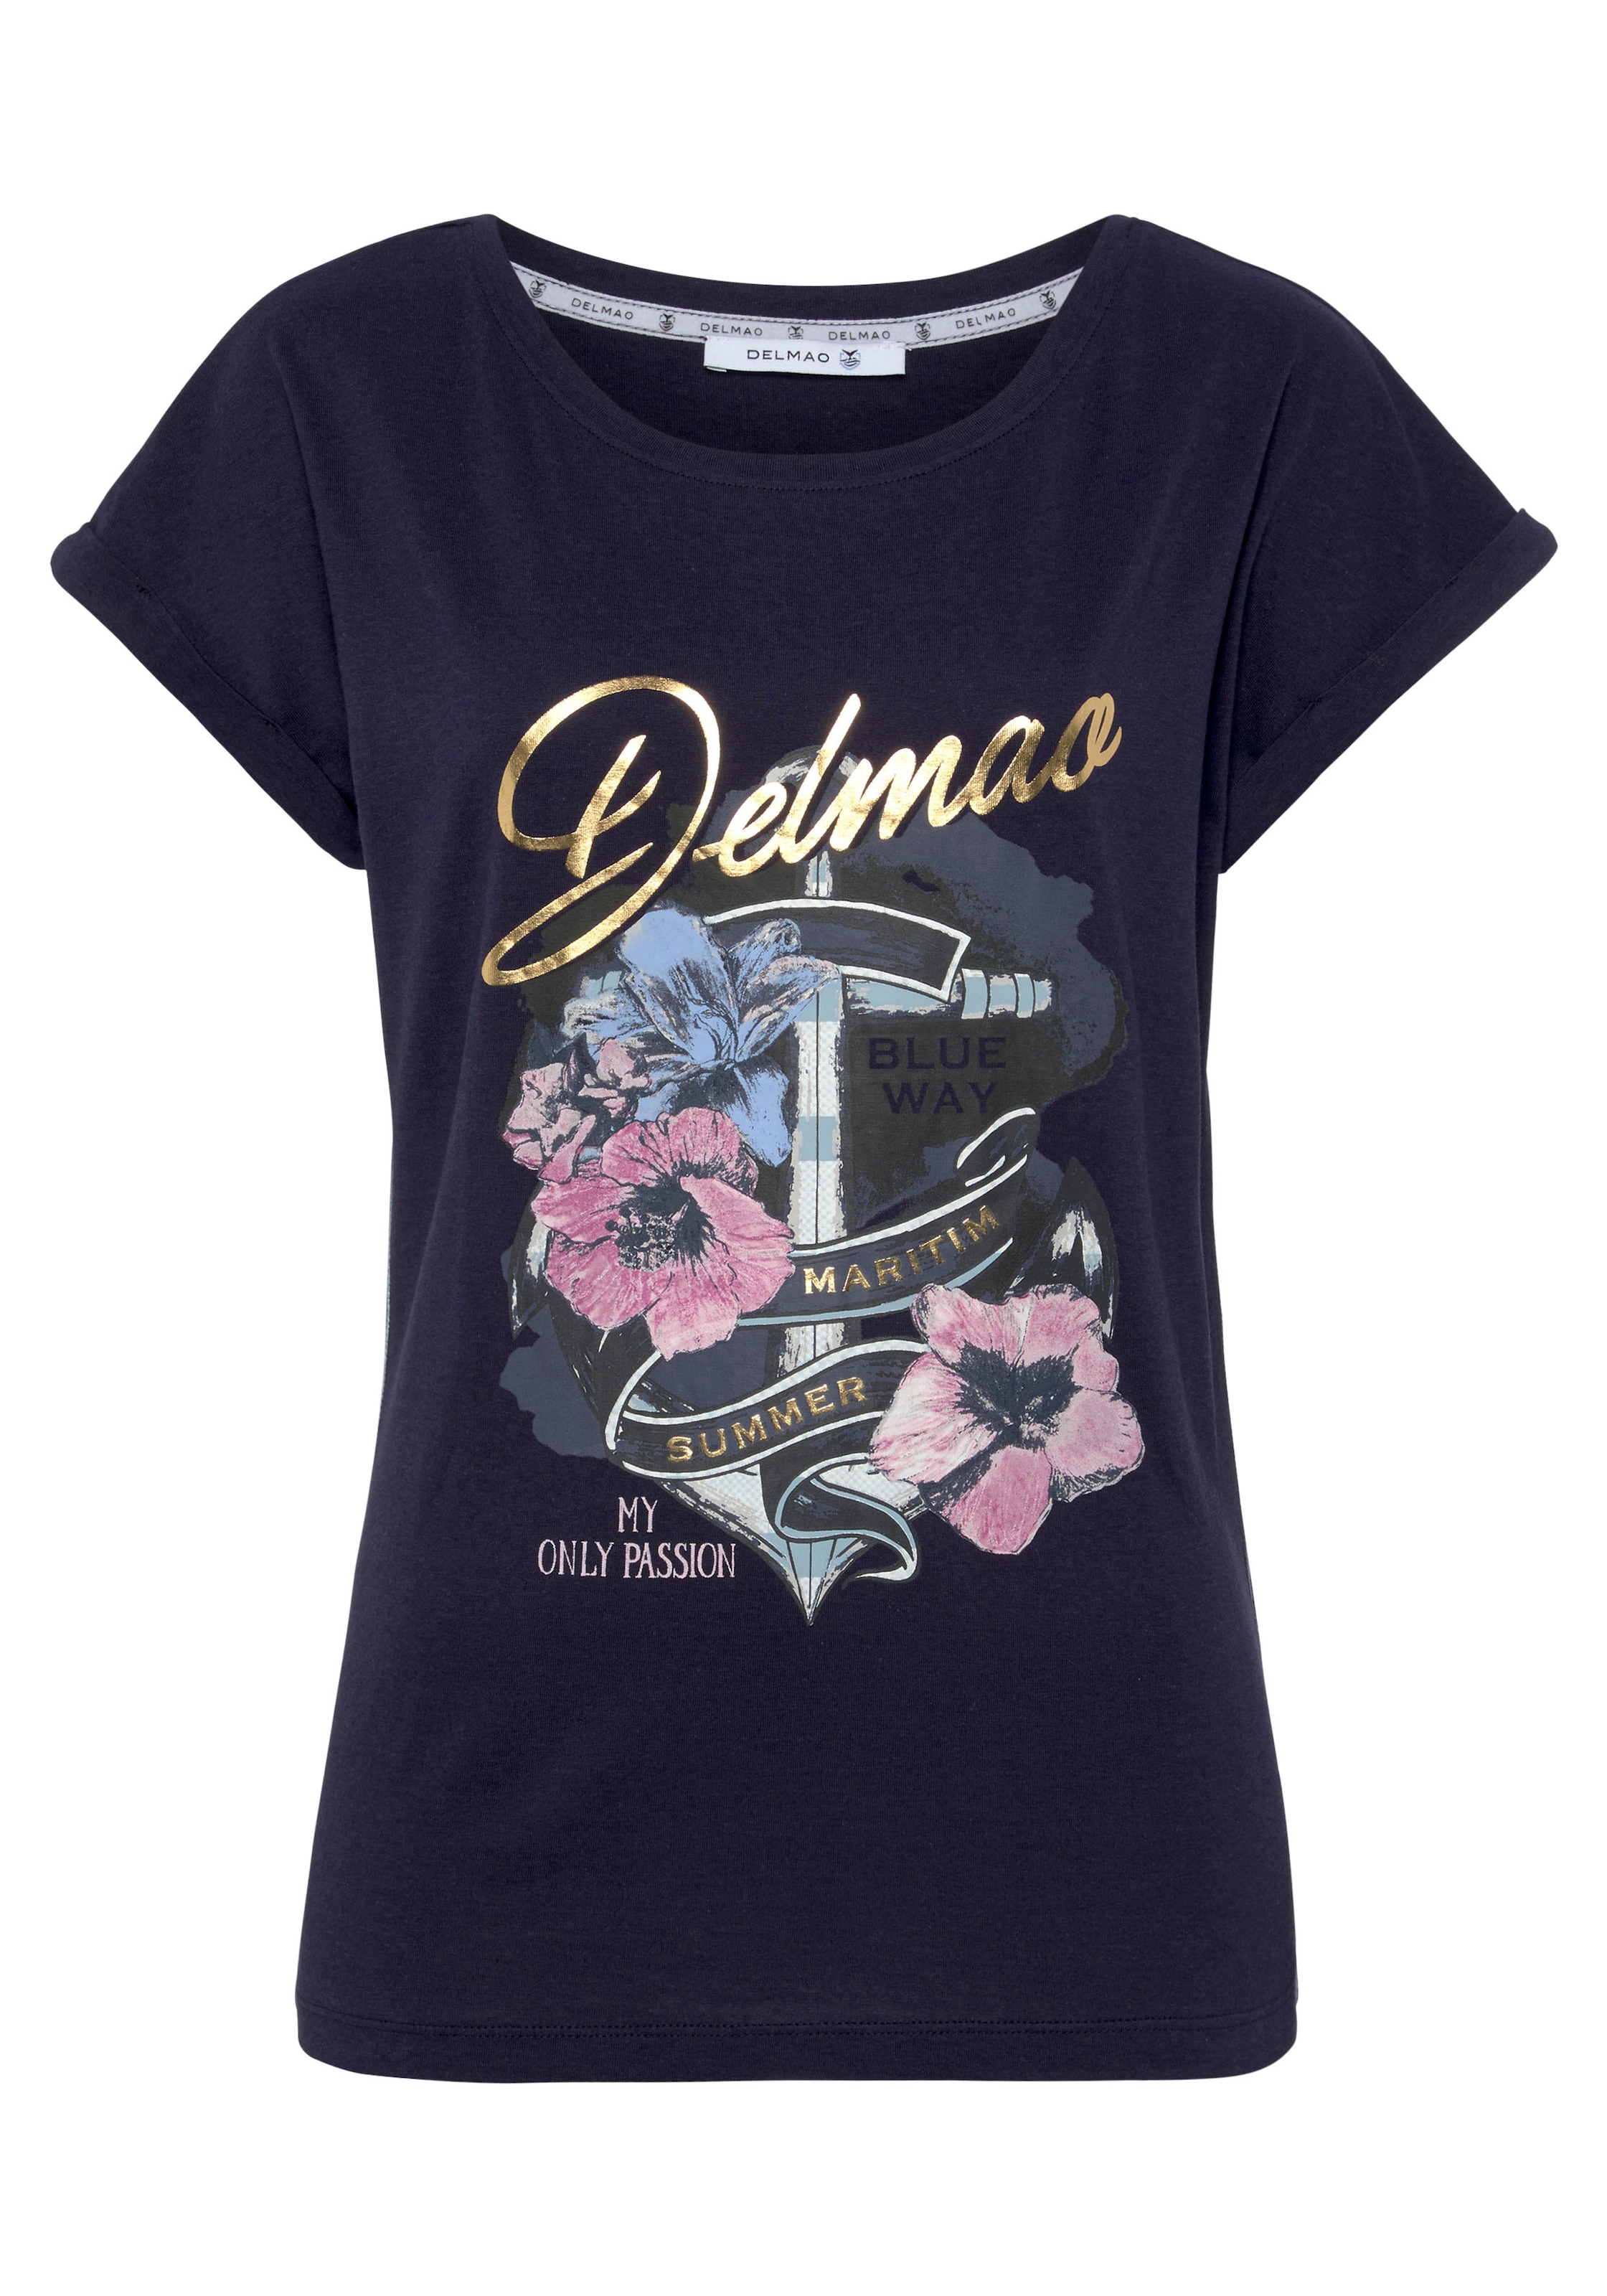 DELMAO Print-Shirt, mit geblümten MARKE! Anker-Logodruck NEUE shoppen 